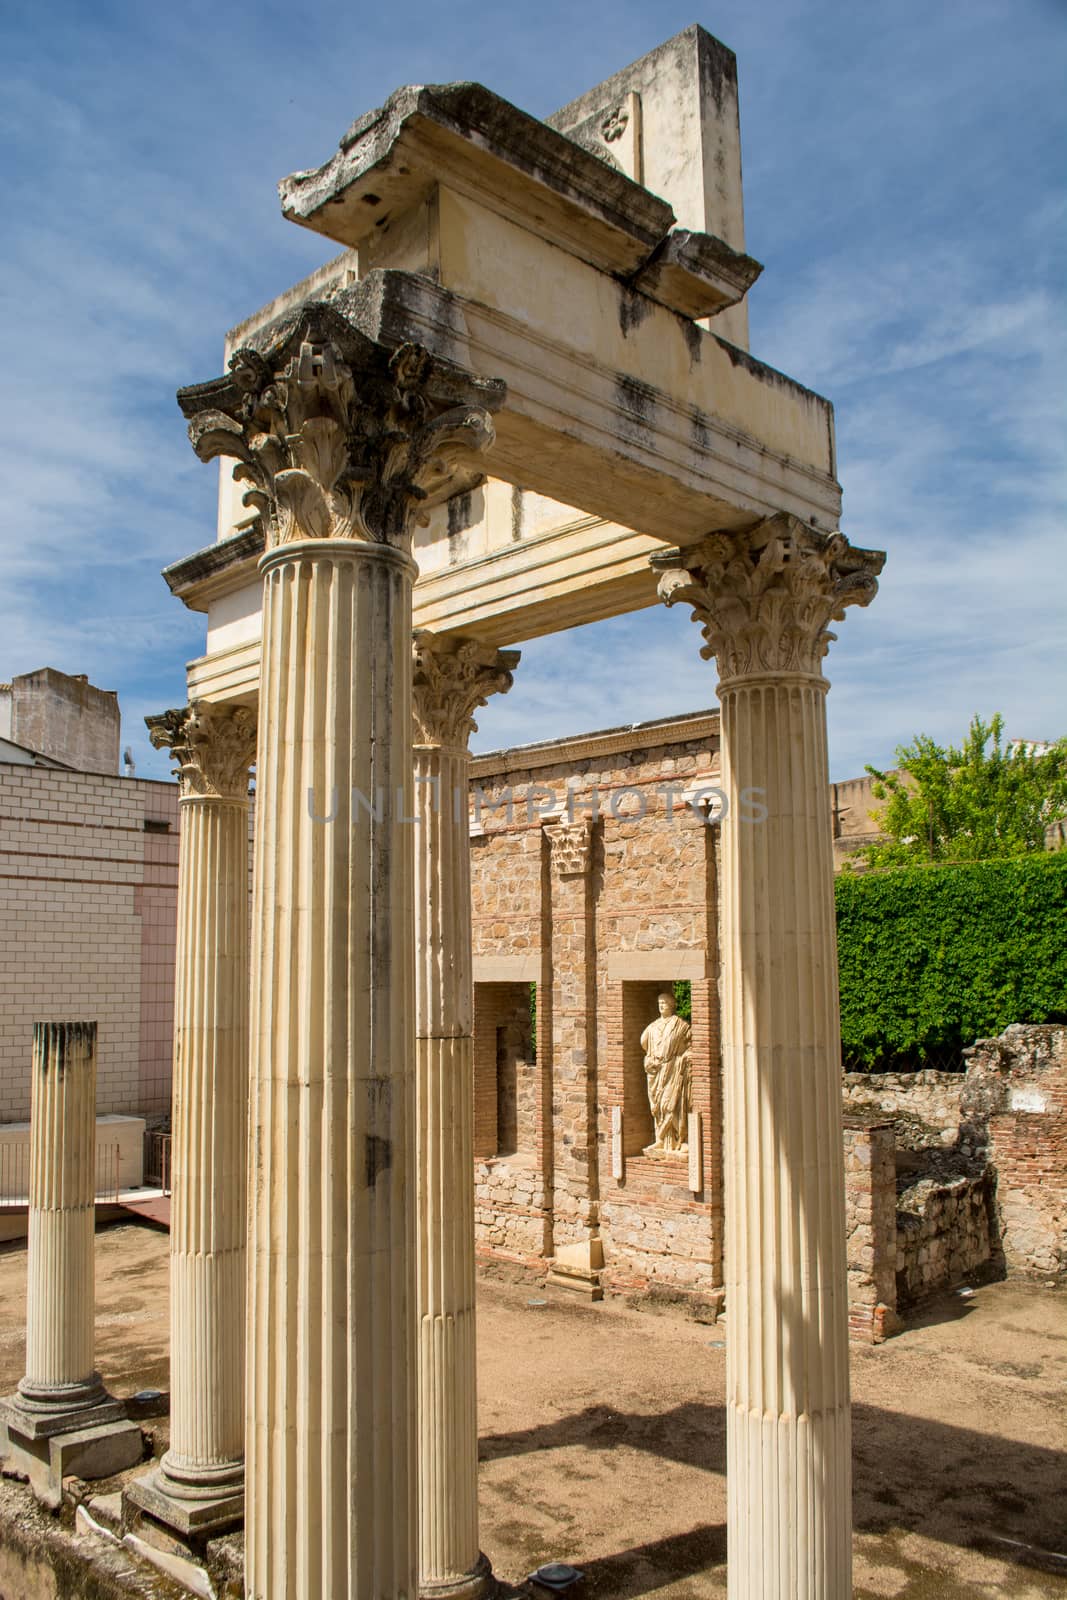 Portico del Foro Municipal de Augusta Emerita. Roman forum ruins in Merida, Extremadura, Spain. by kb79